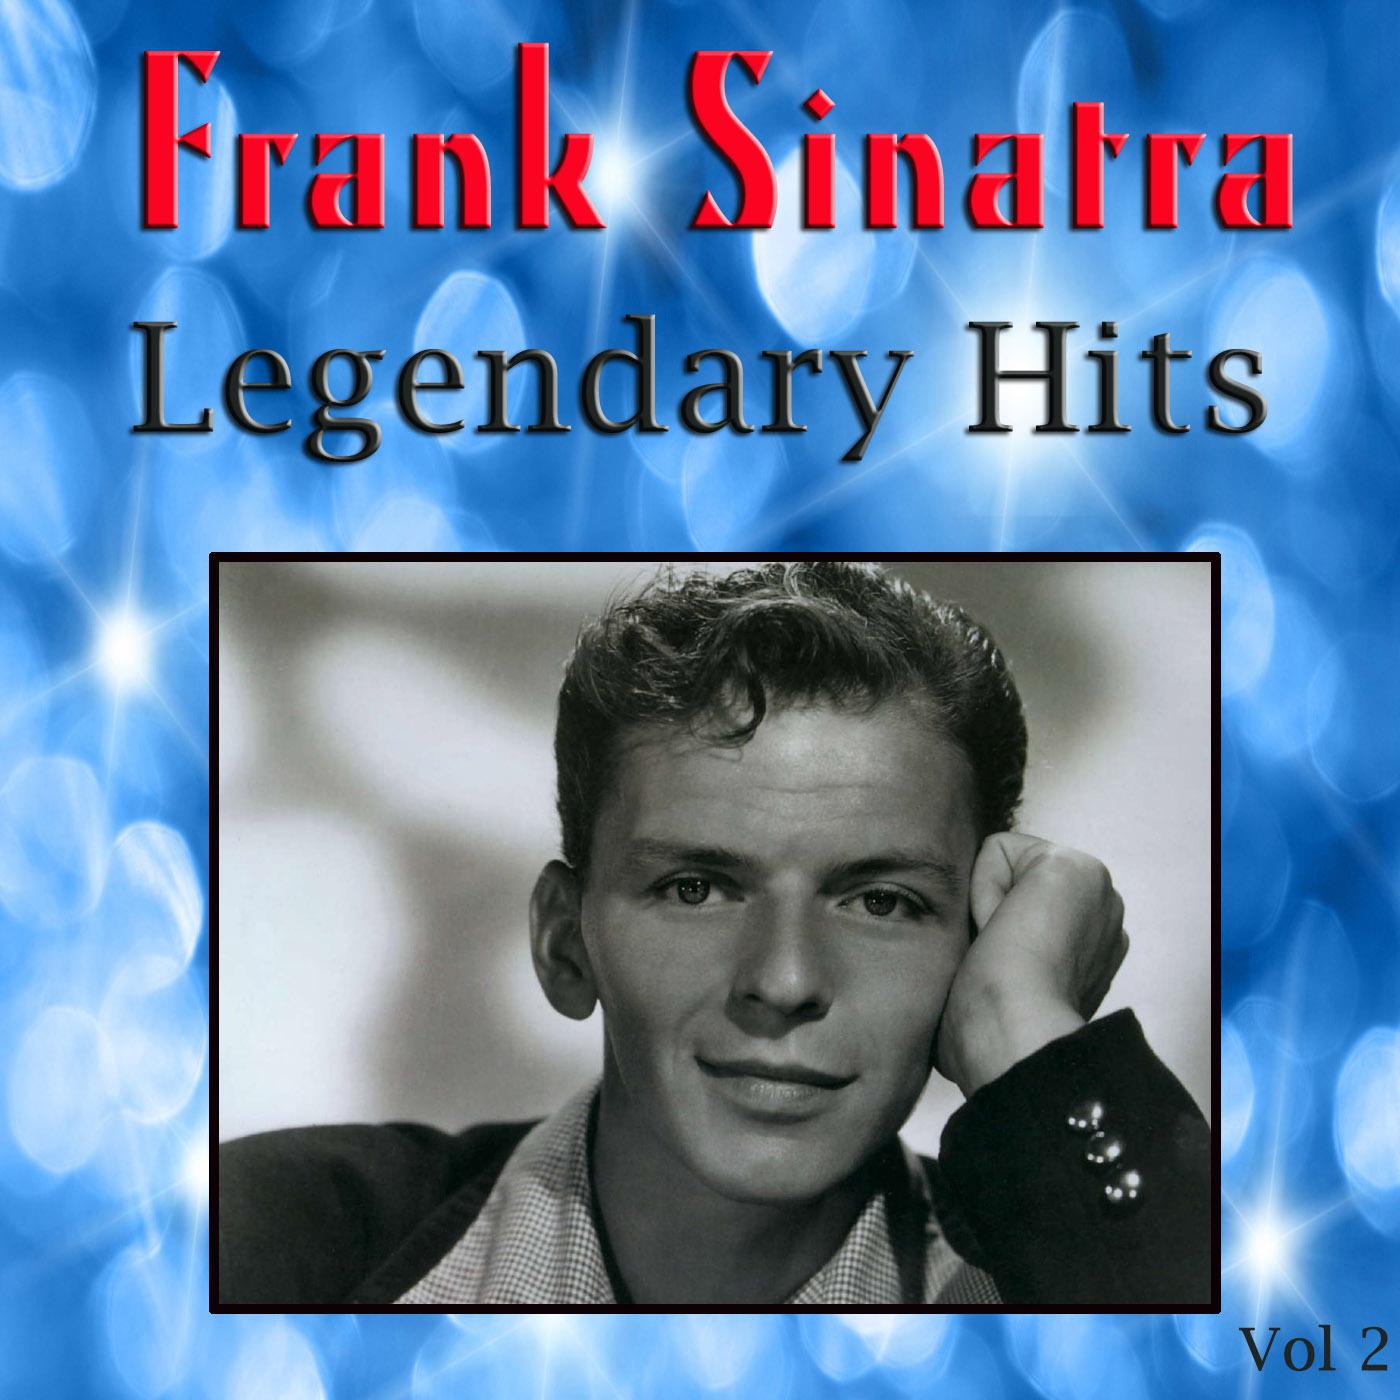 Frank Sinatra Legendary Hits Vol 2